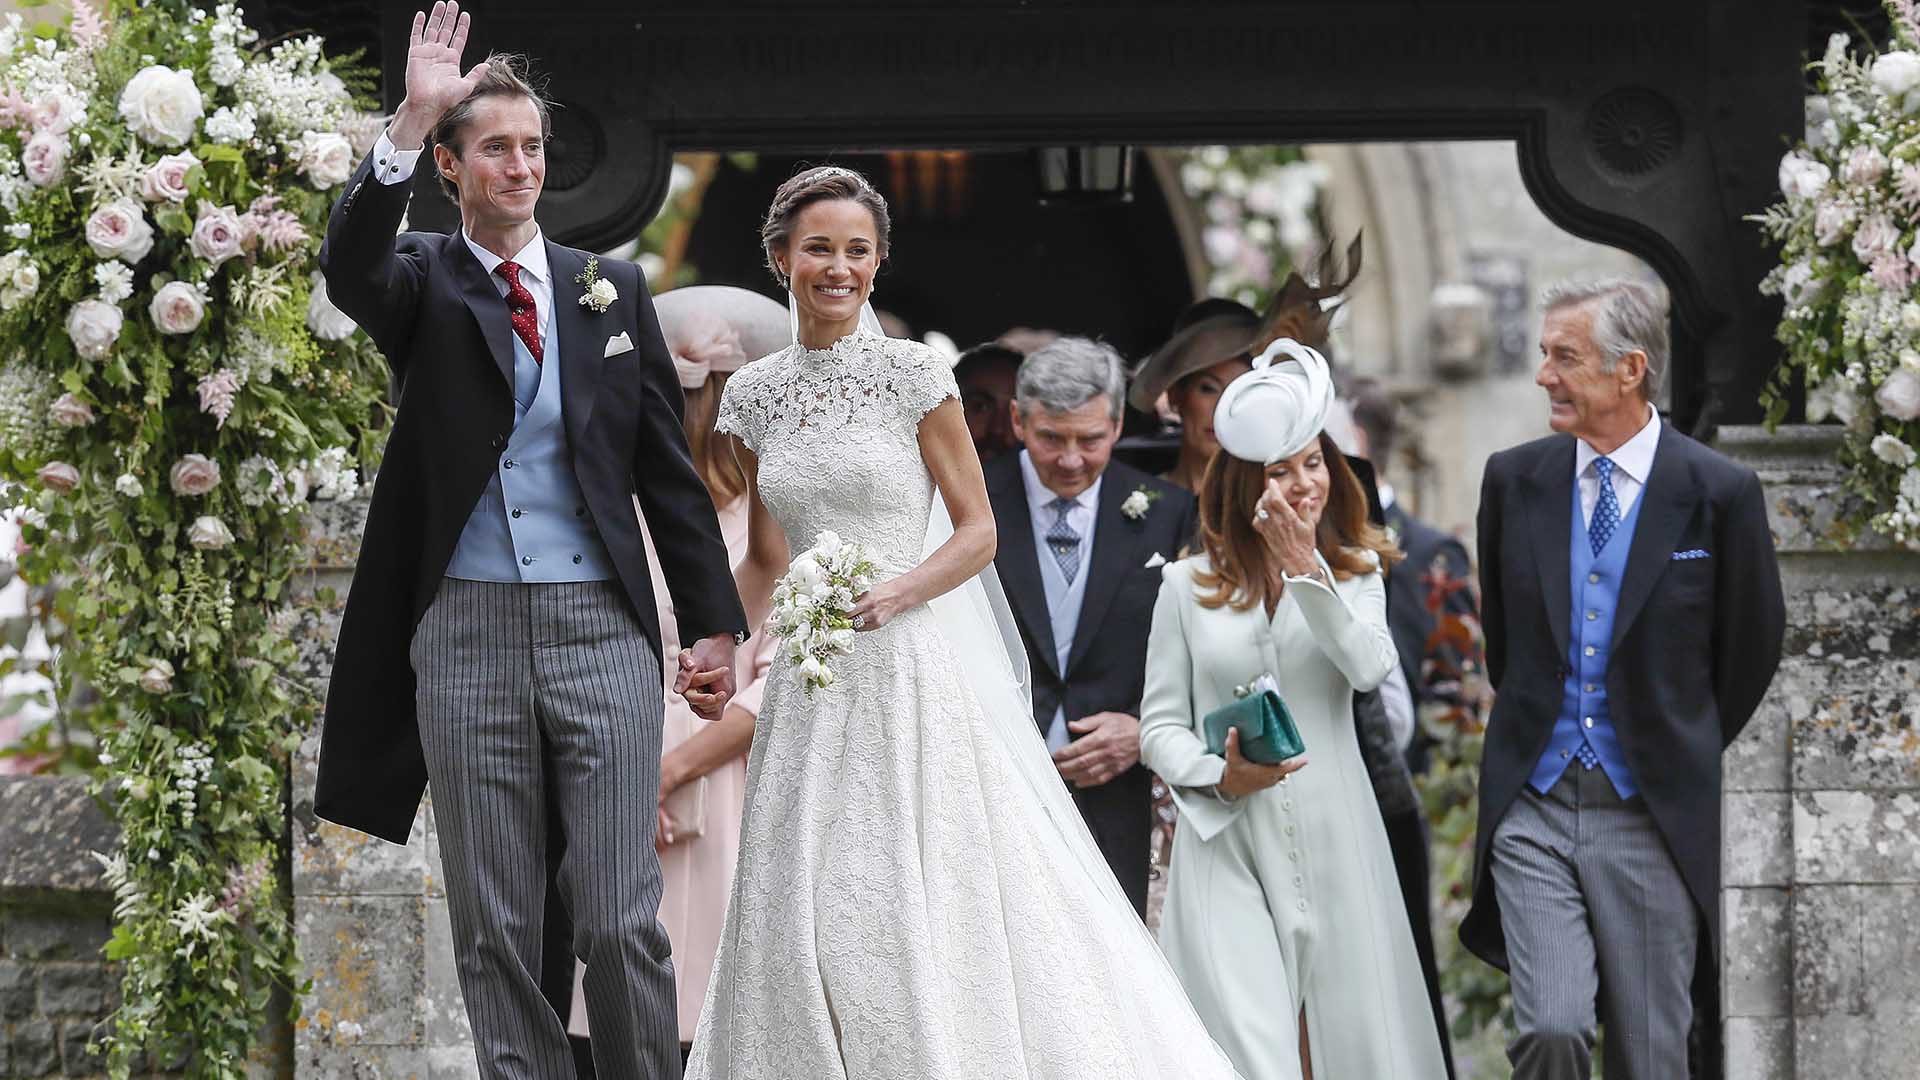 Pippa Middleton and James Matthews attending their wedding at St Mark’schurch in Englefield, Berkshire.